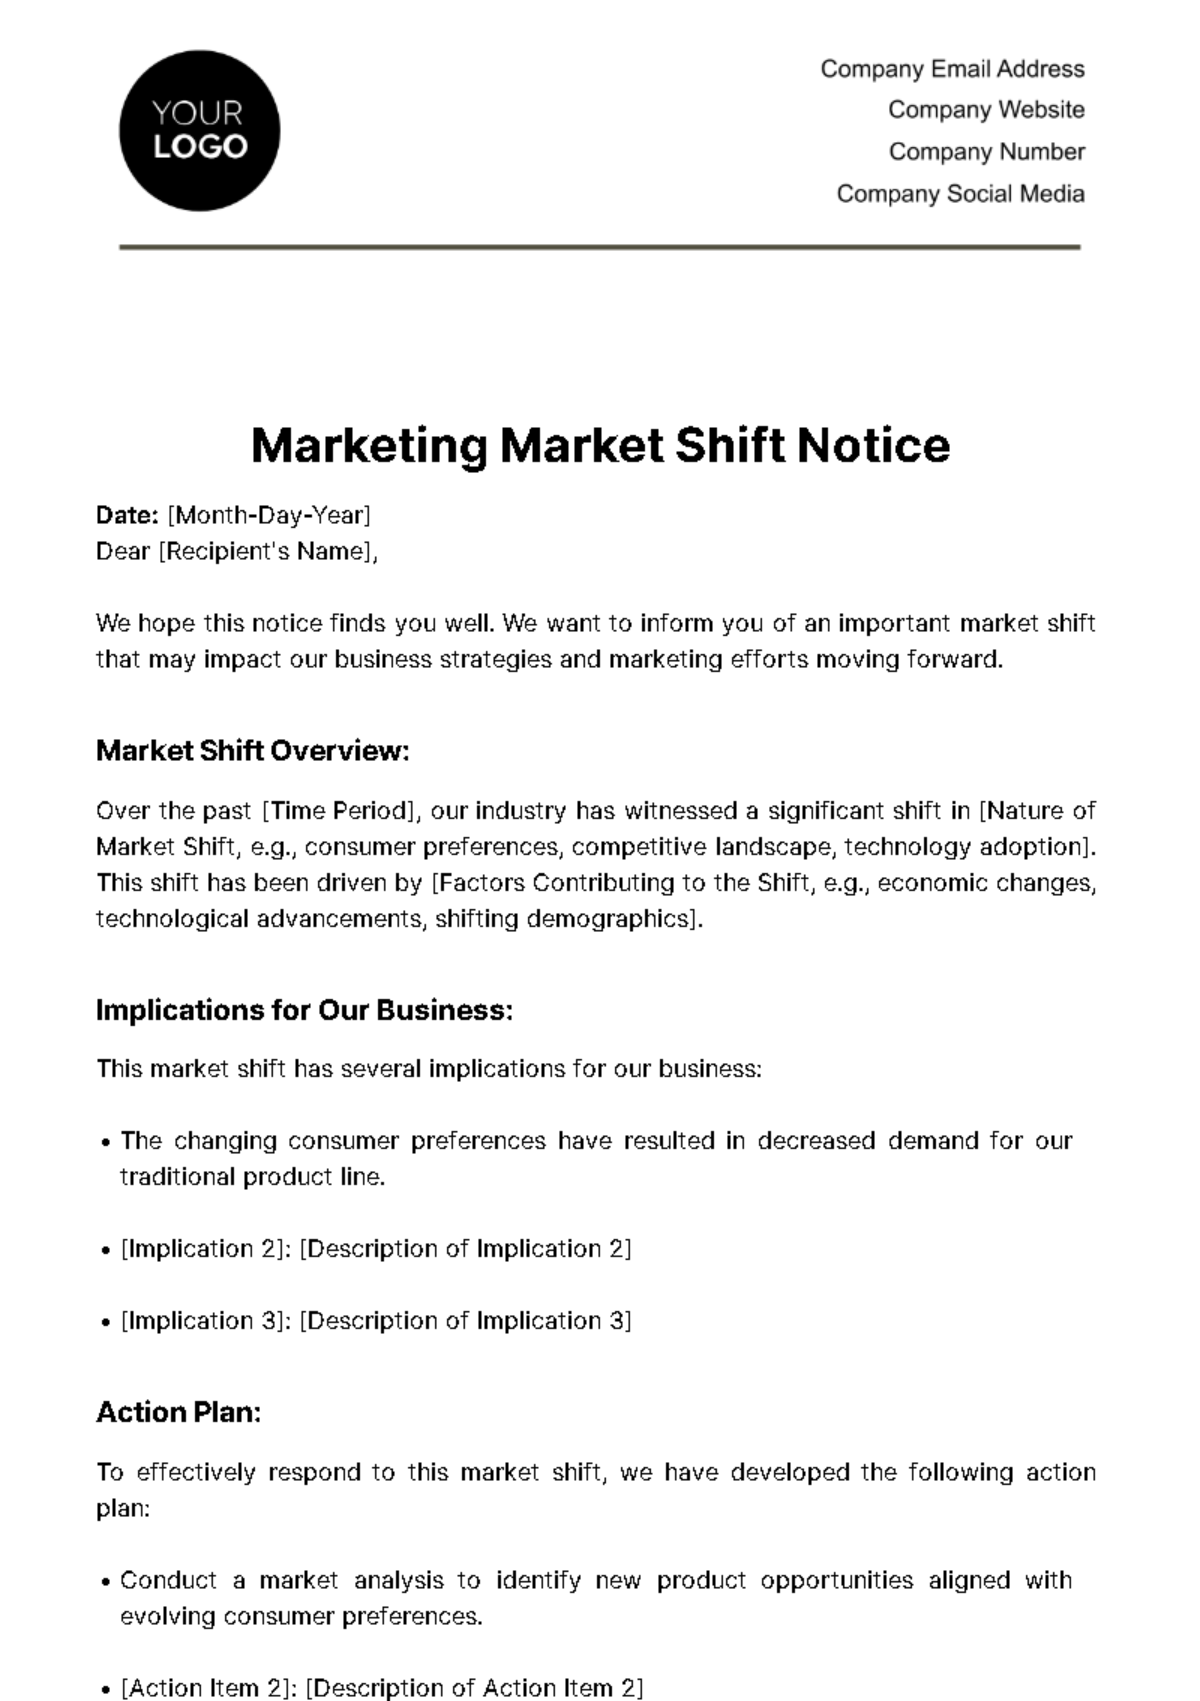 Free Marketing Market Shift Notice Template